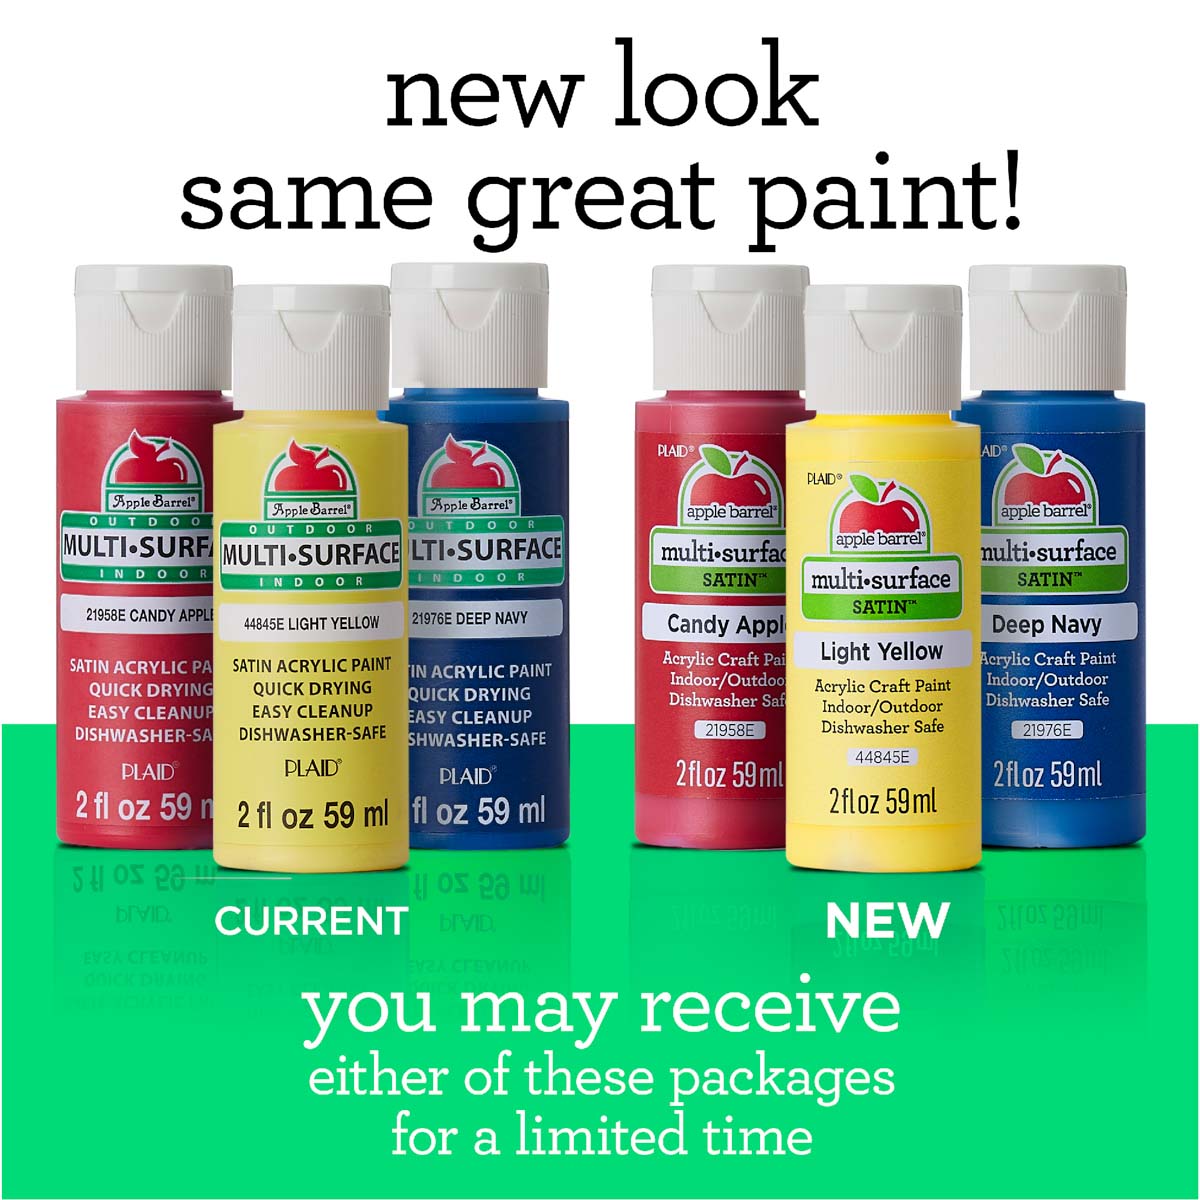 Apple Barrel ® Multi-Surface Satin Acrylic Paints - Green Turquoise, 2 oz. - 13445E